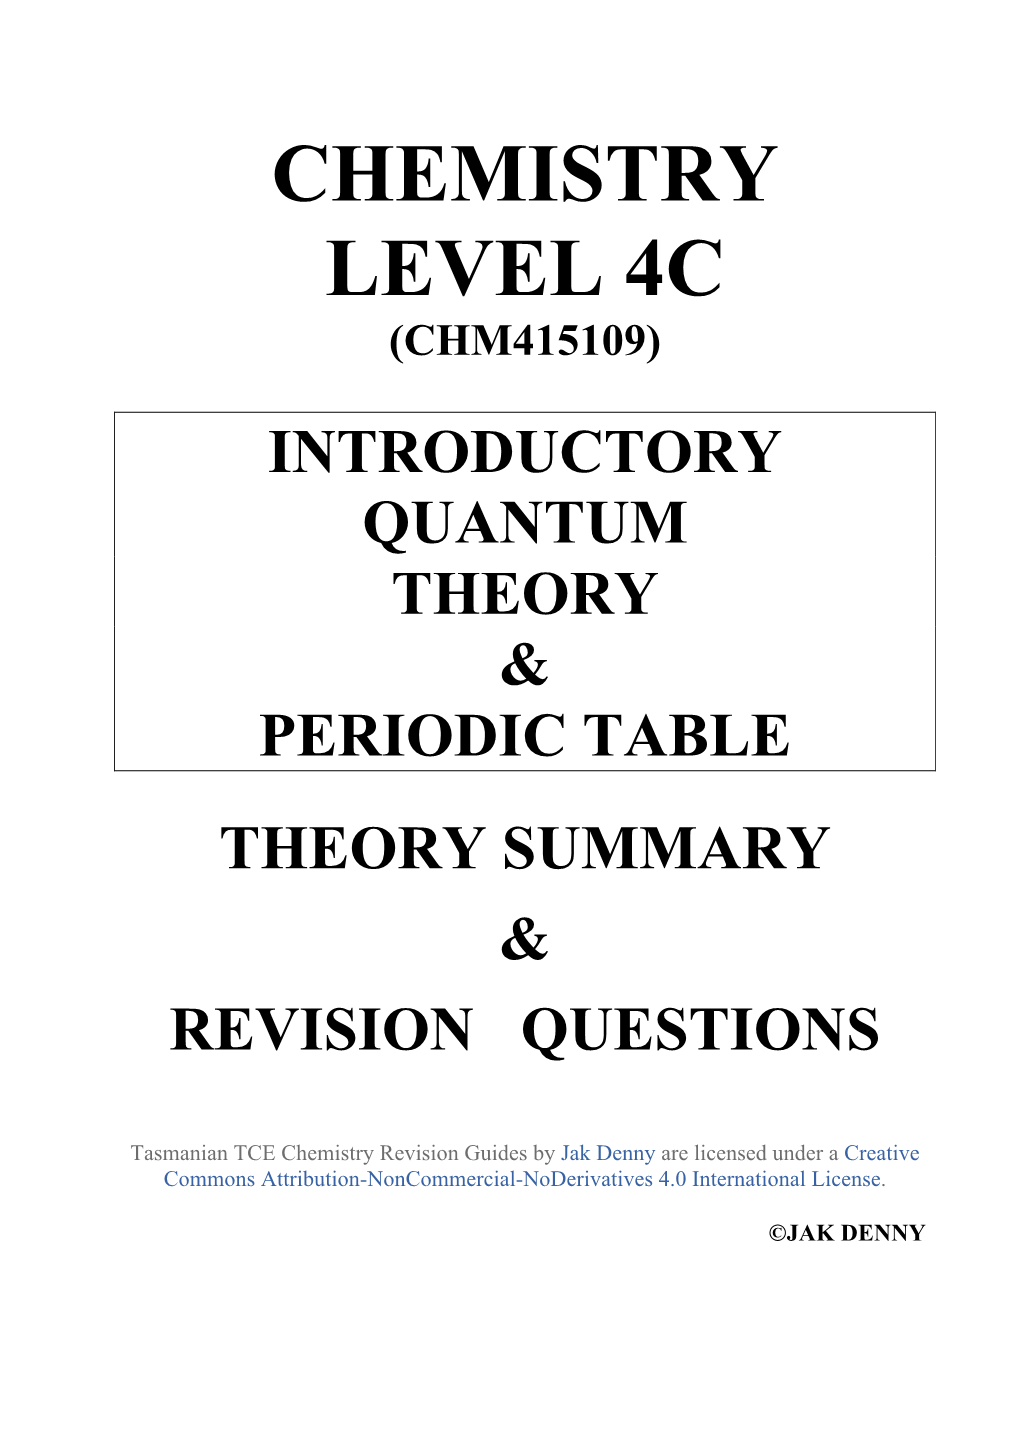 Chemistry Level 4C (Chm415109)